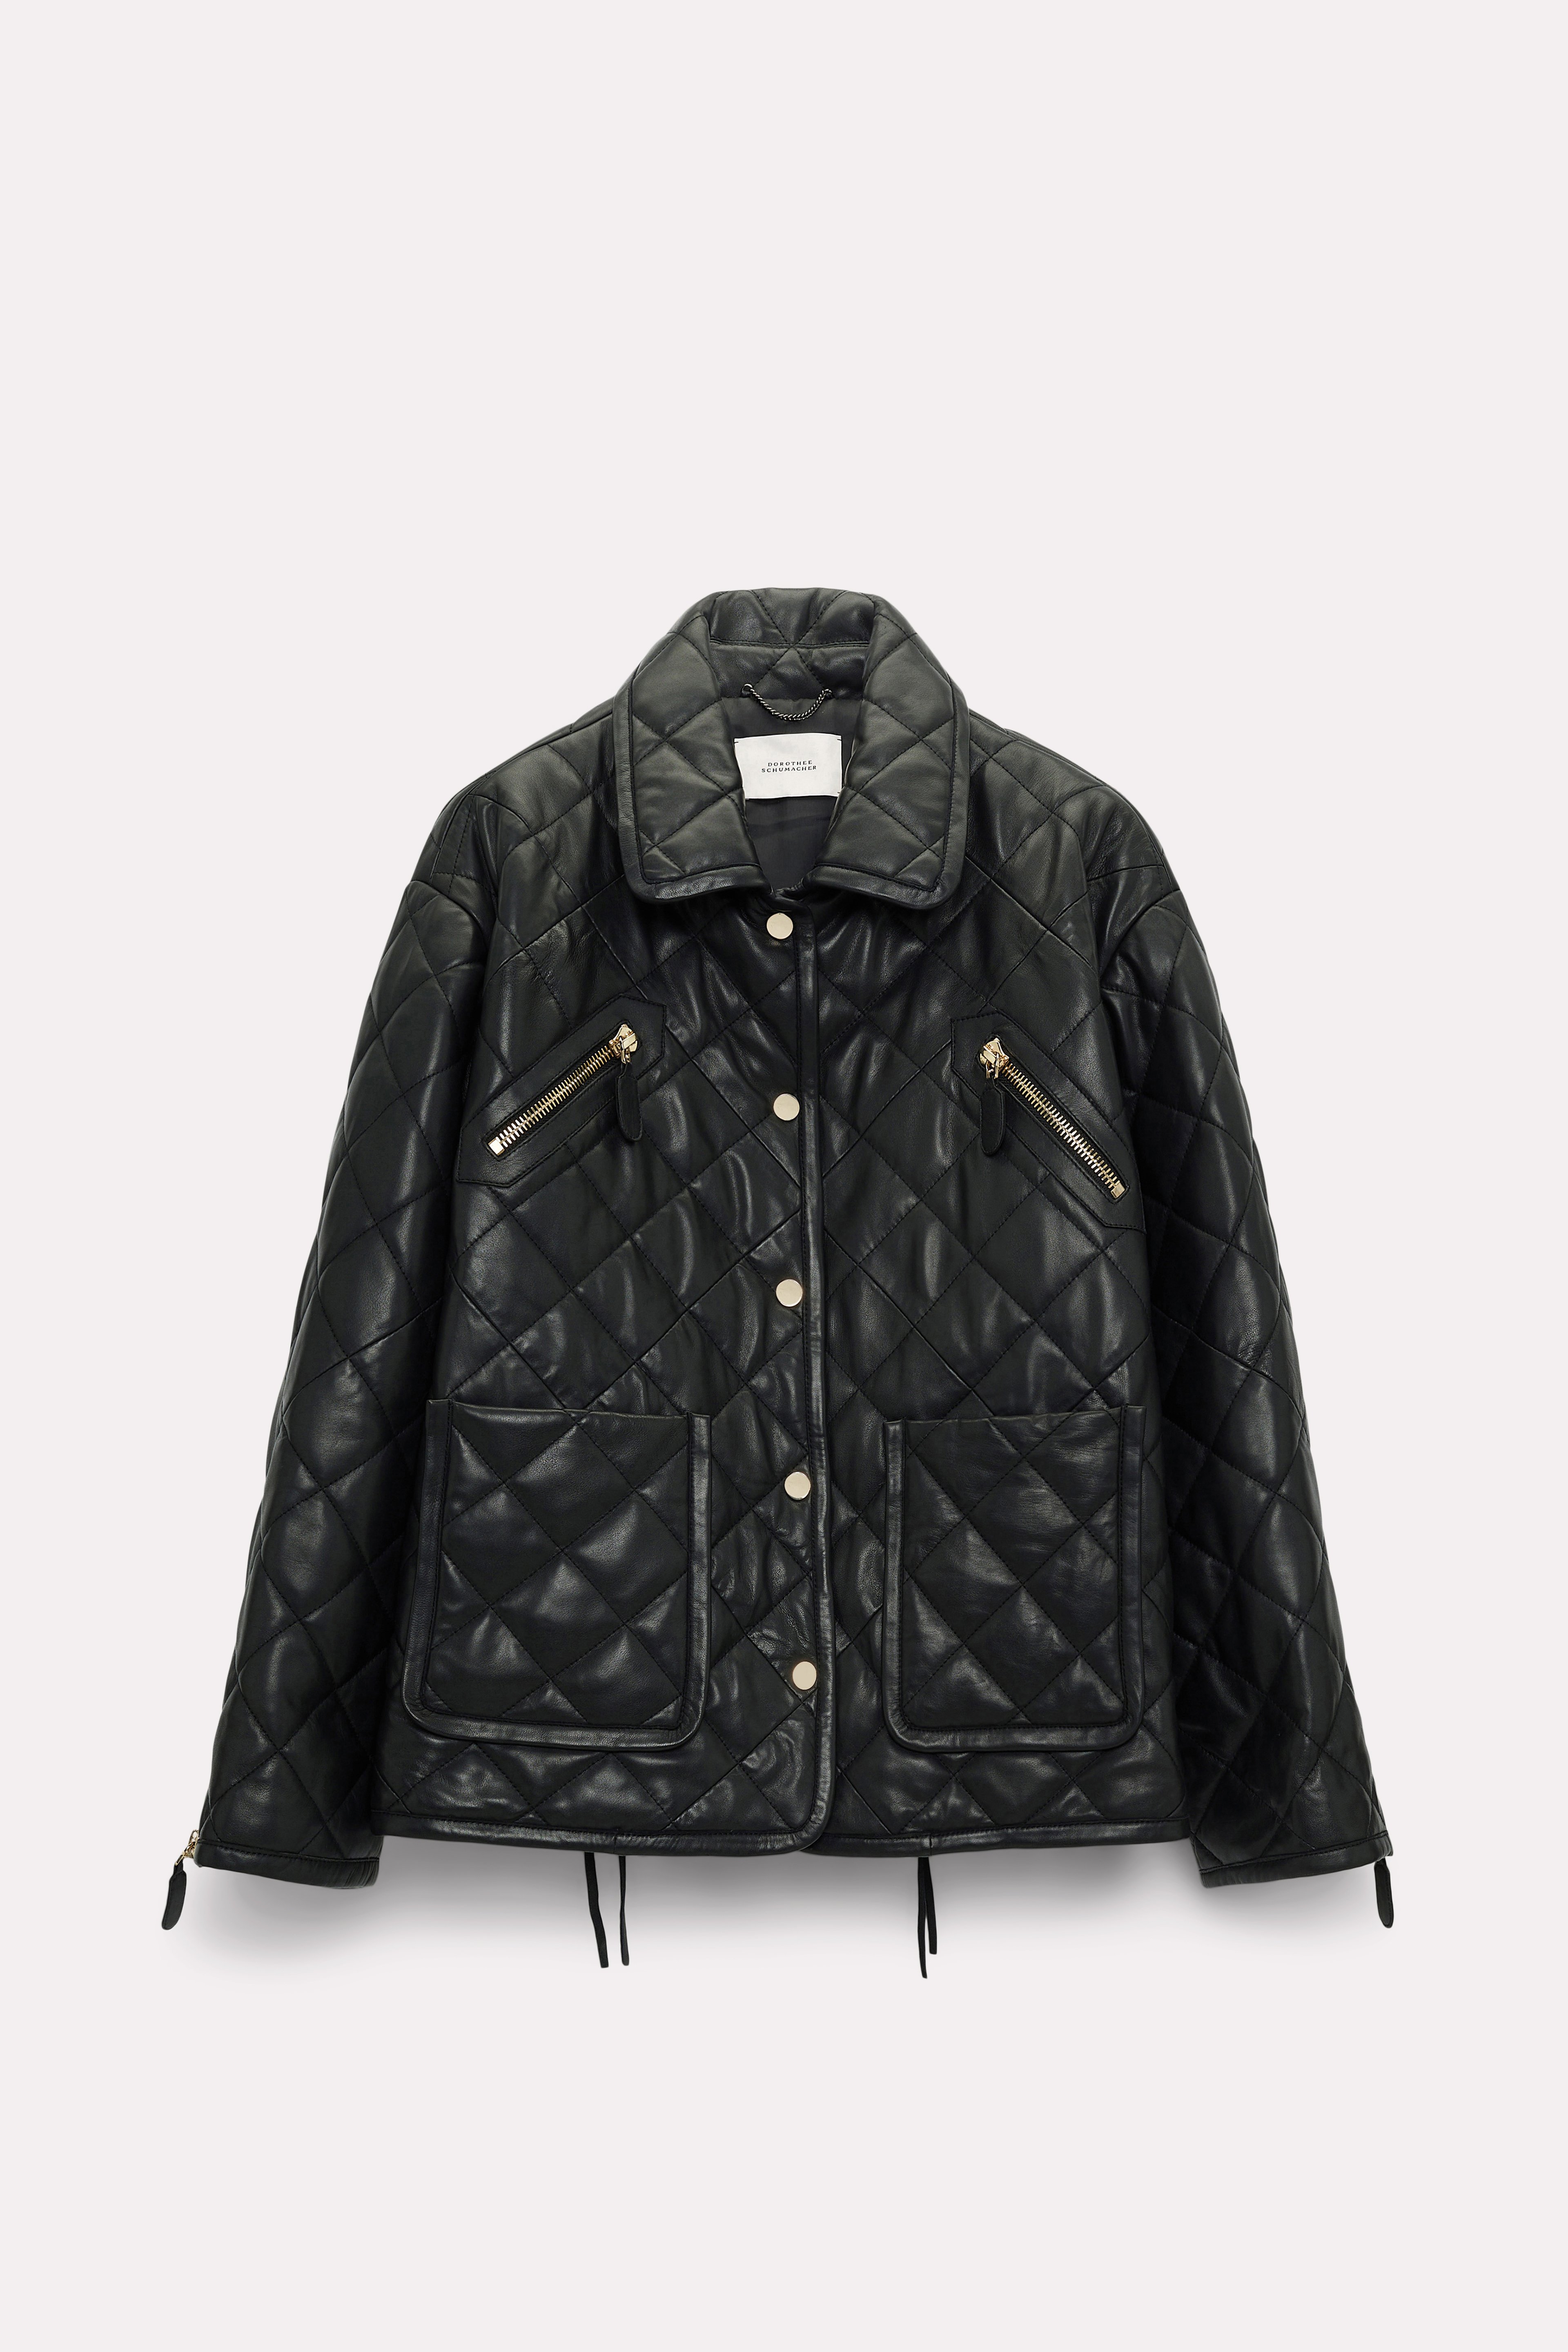 Jackets & Coats | DOROTHEE SCHUMACHER - Official Online Store